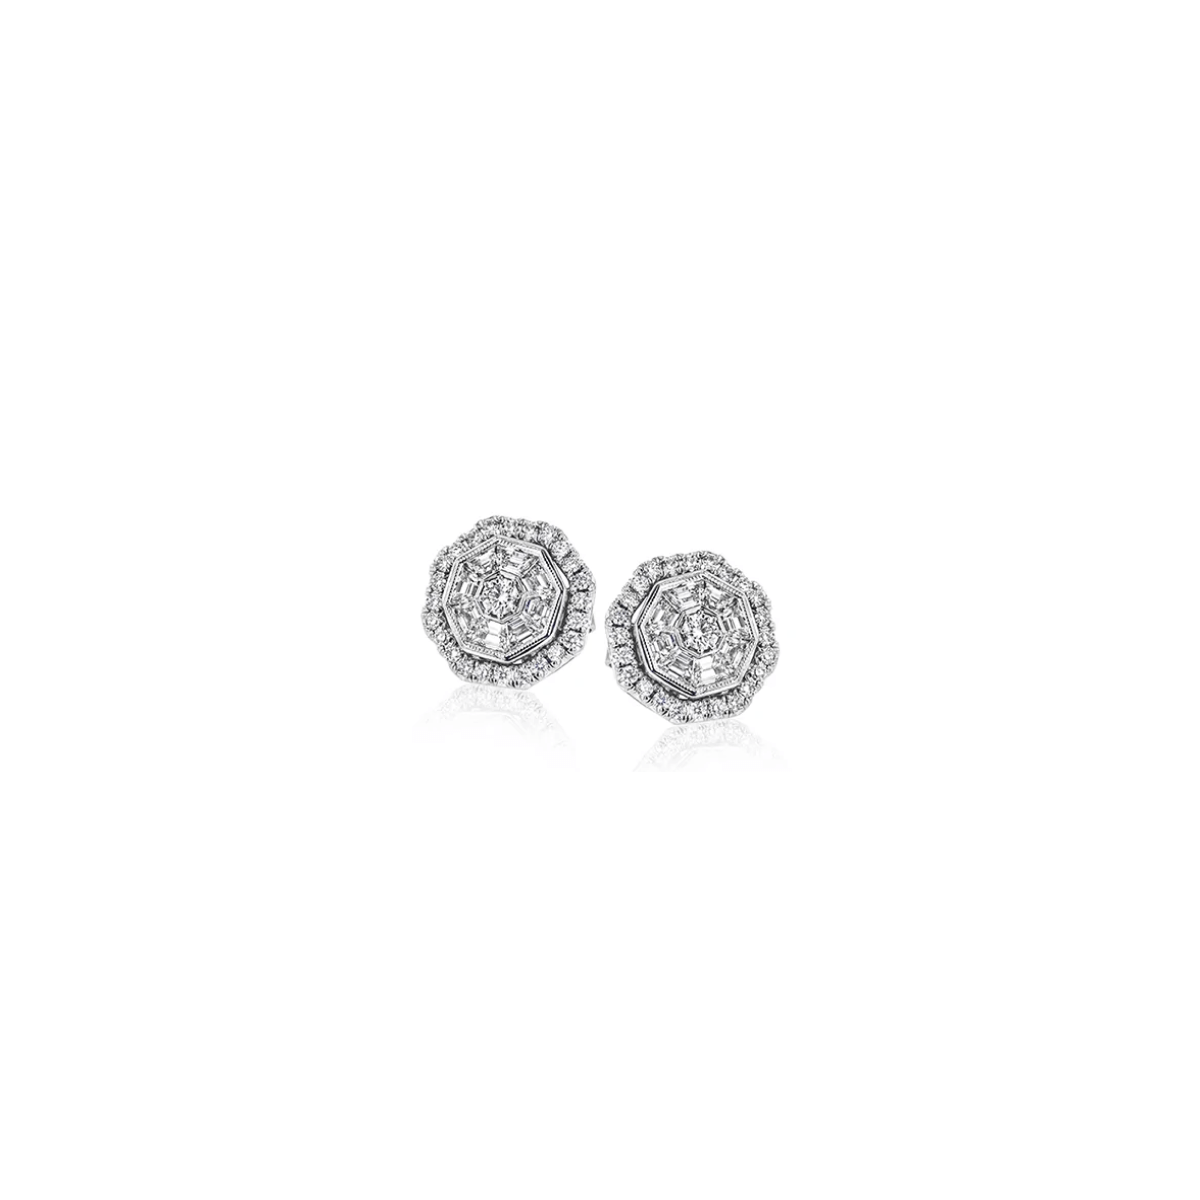 Simon G. Jewelry earrings